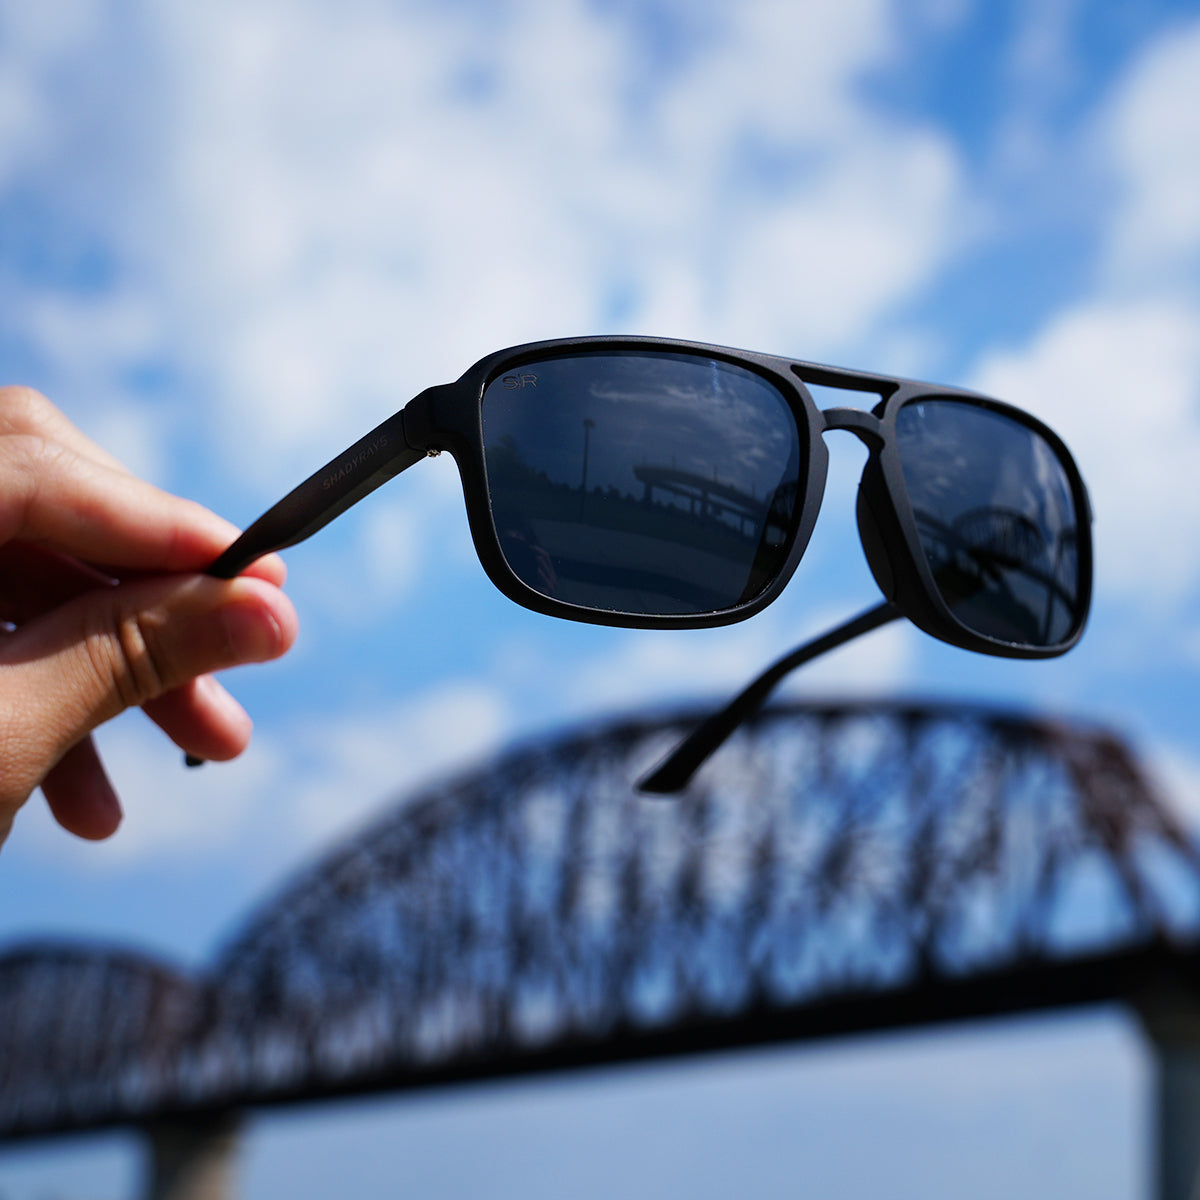 Shady Men's Navigator Polarized Sunglasses